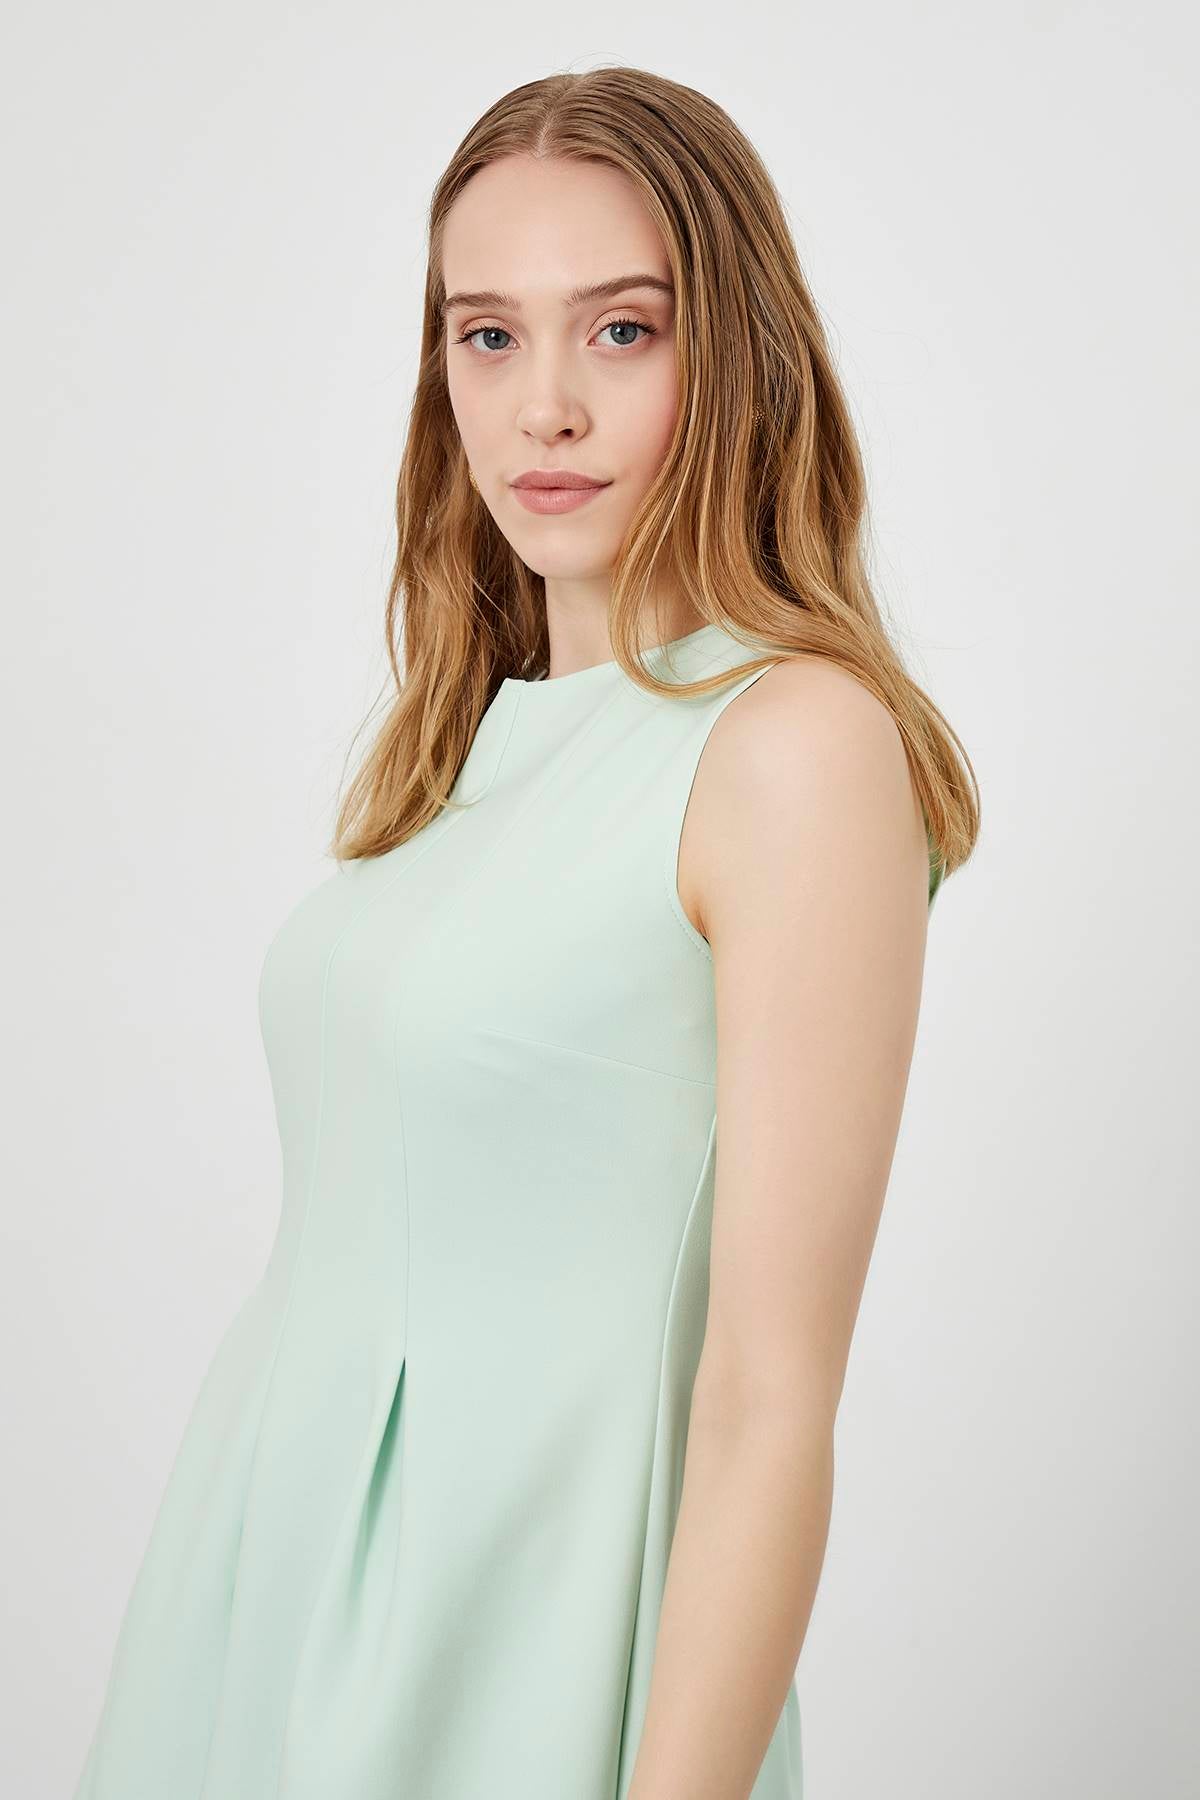 Mint Green Pleated Midi Length Dress